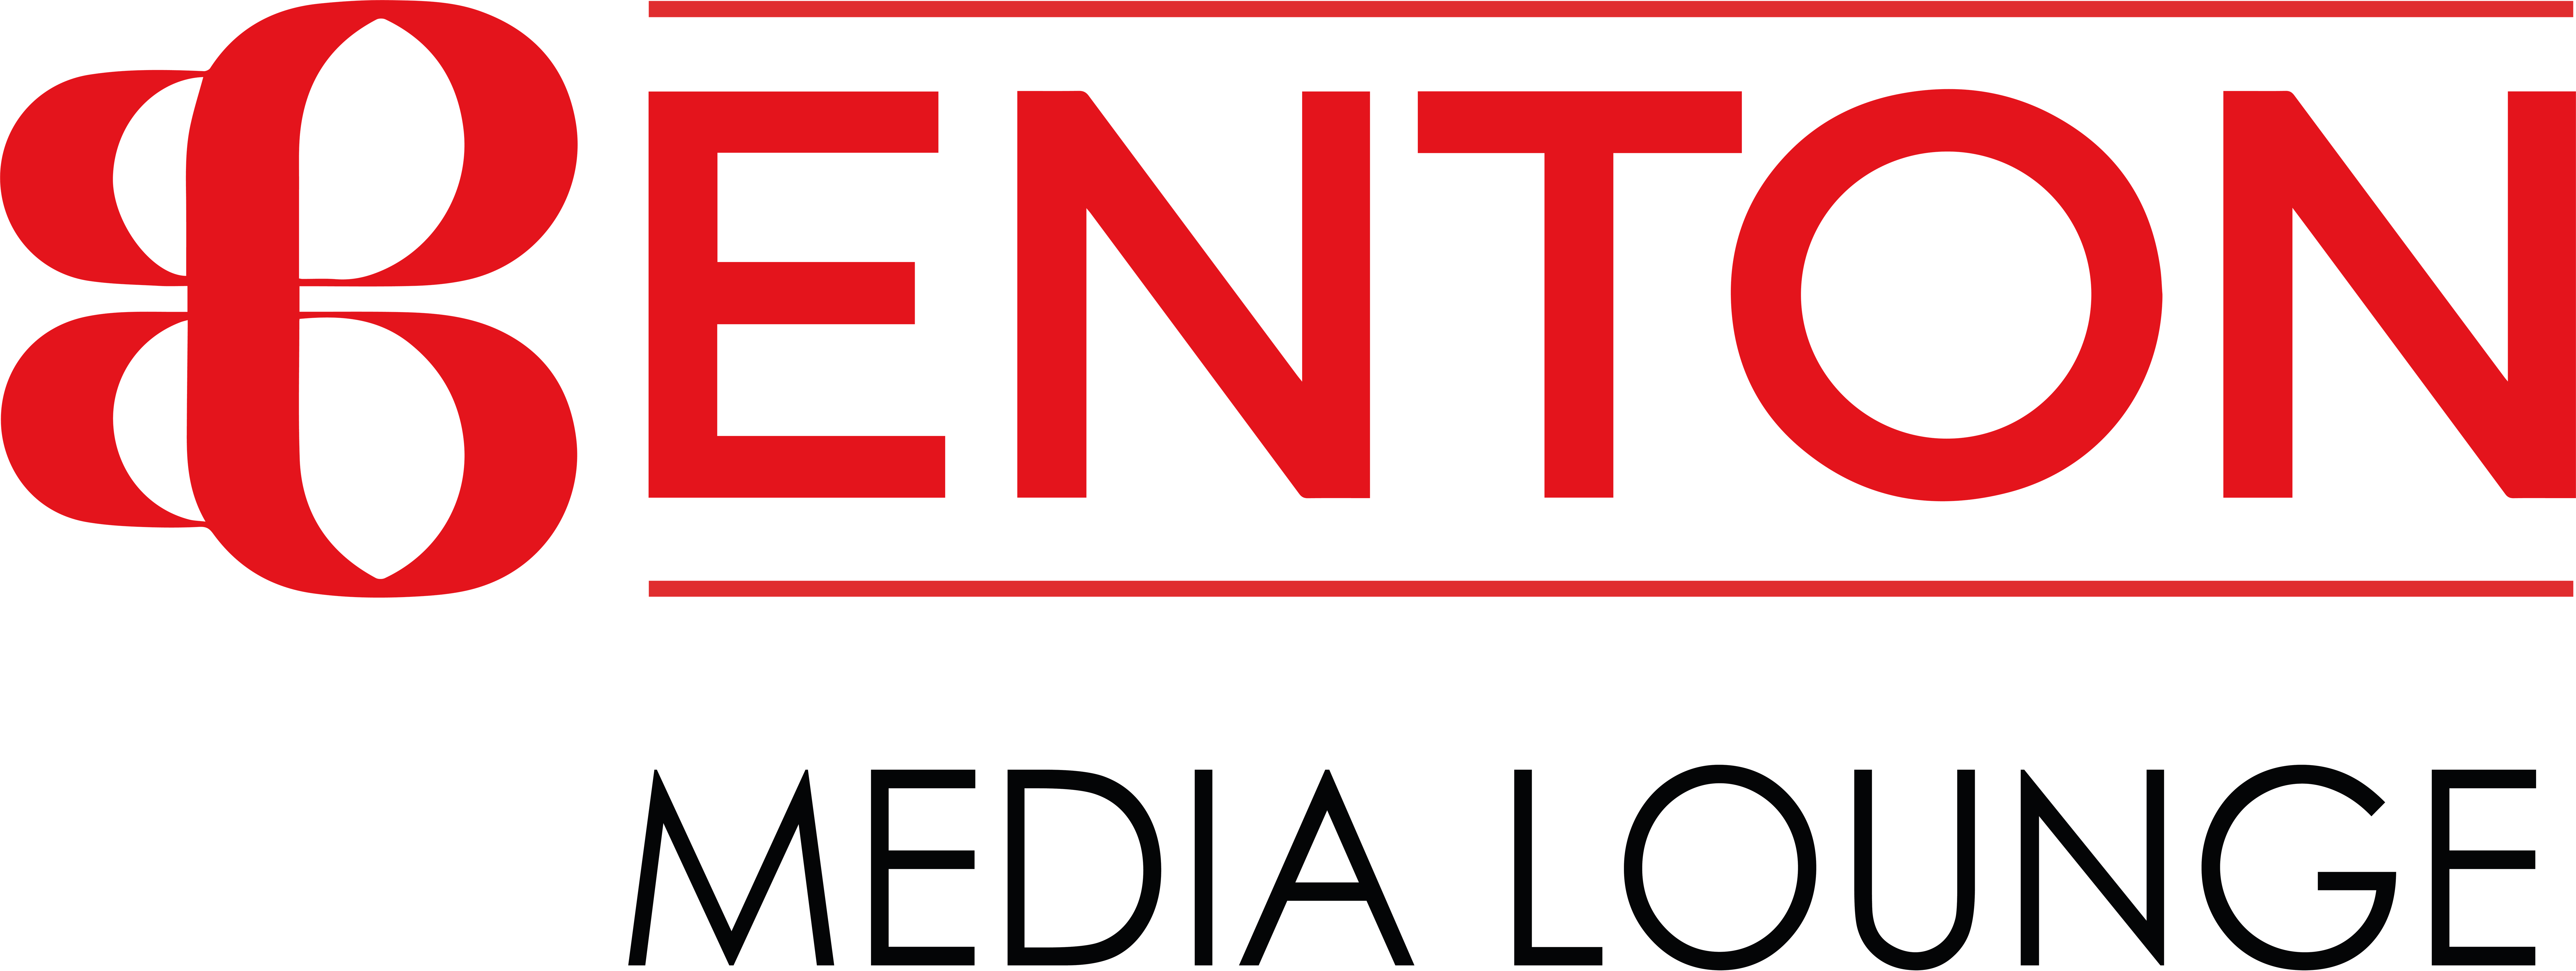 Benton Media Lounge